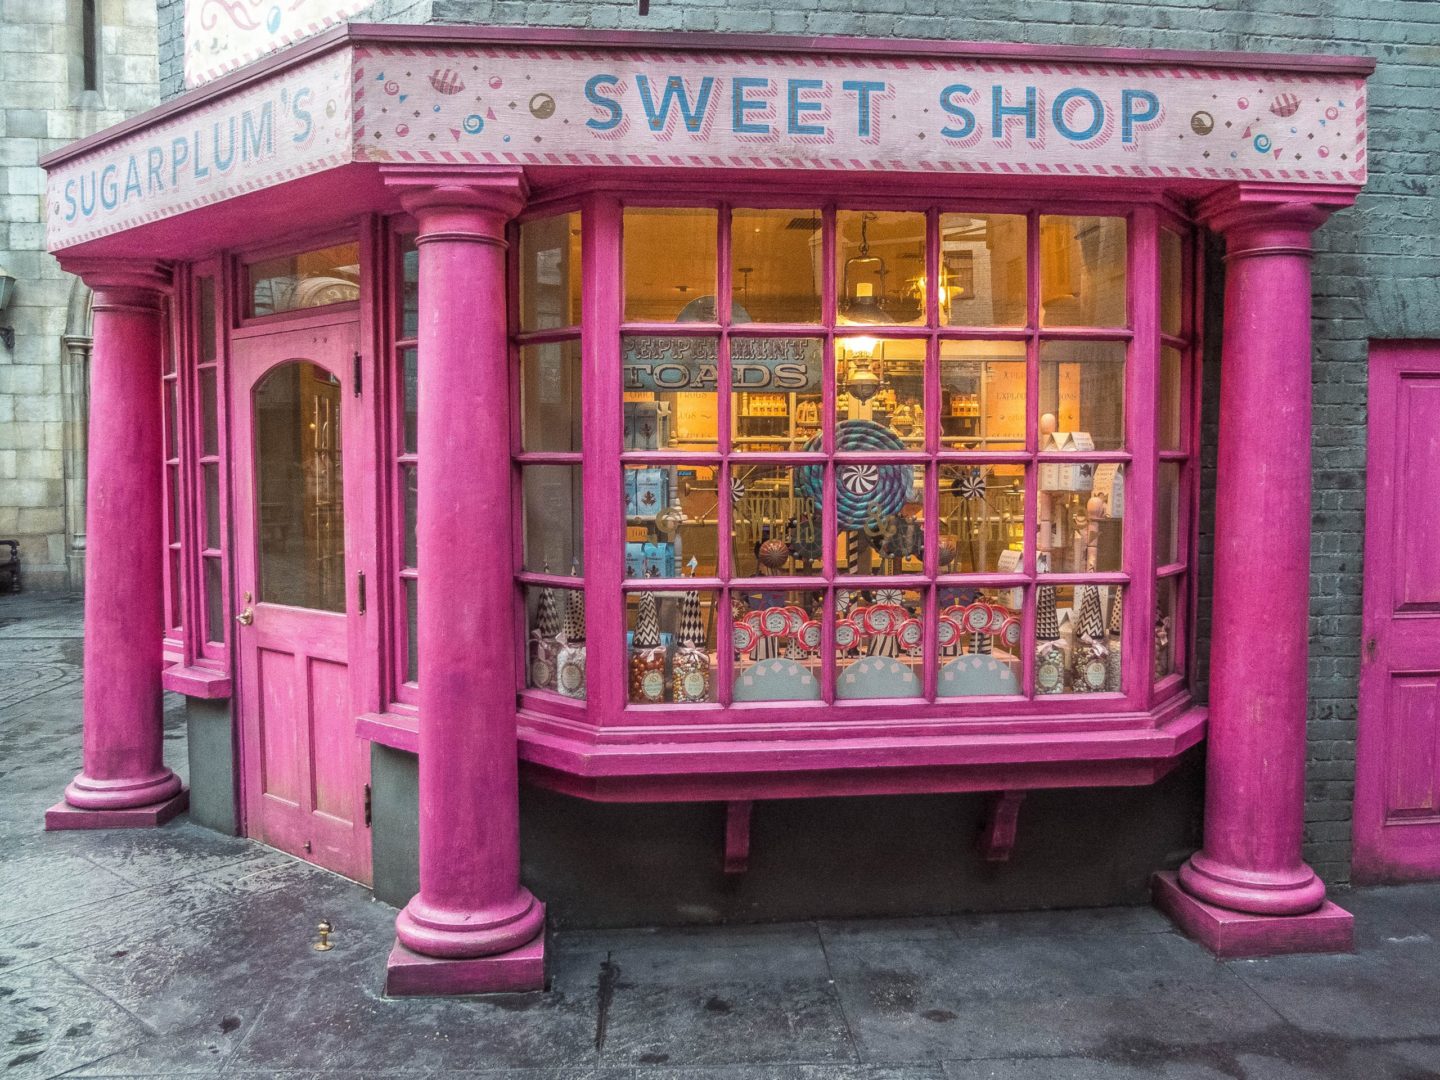 Universal Studios Sugarplums sweet shop, the Wizarding World of Harry Potter